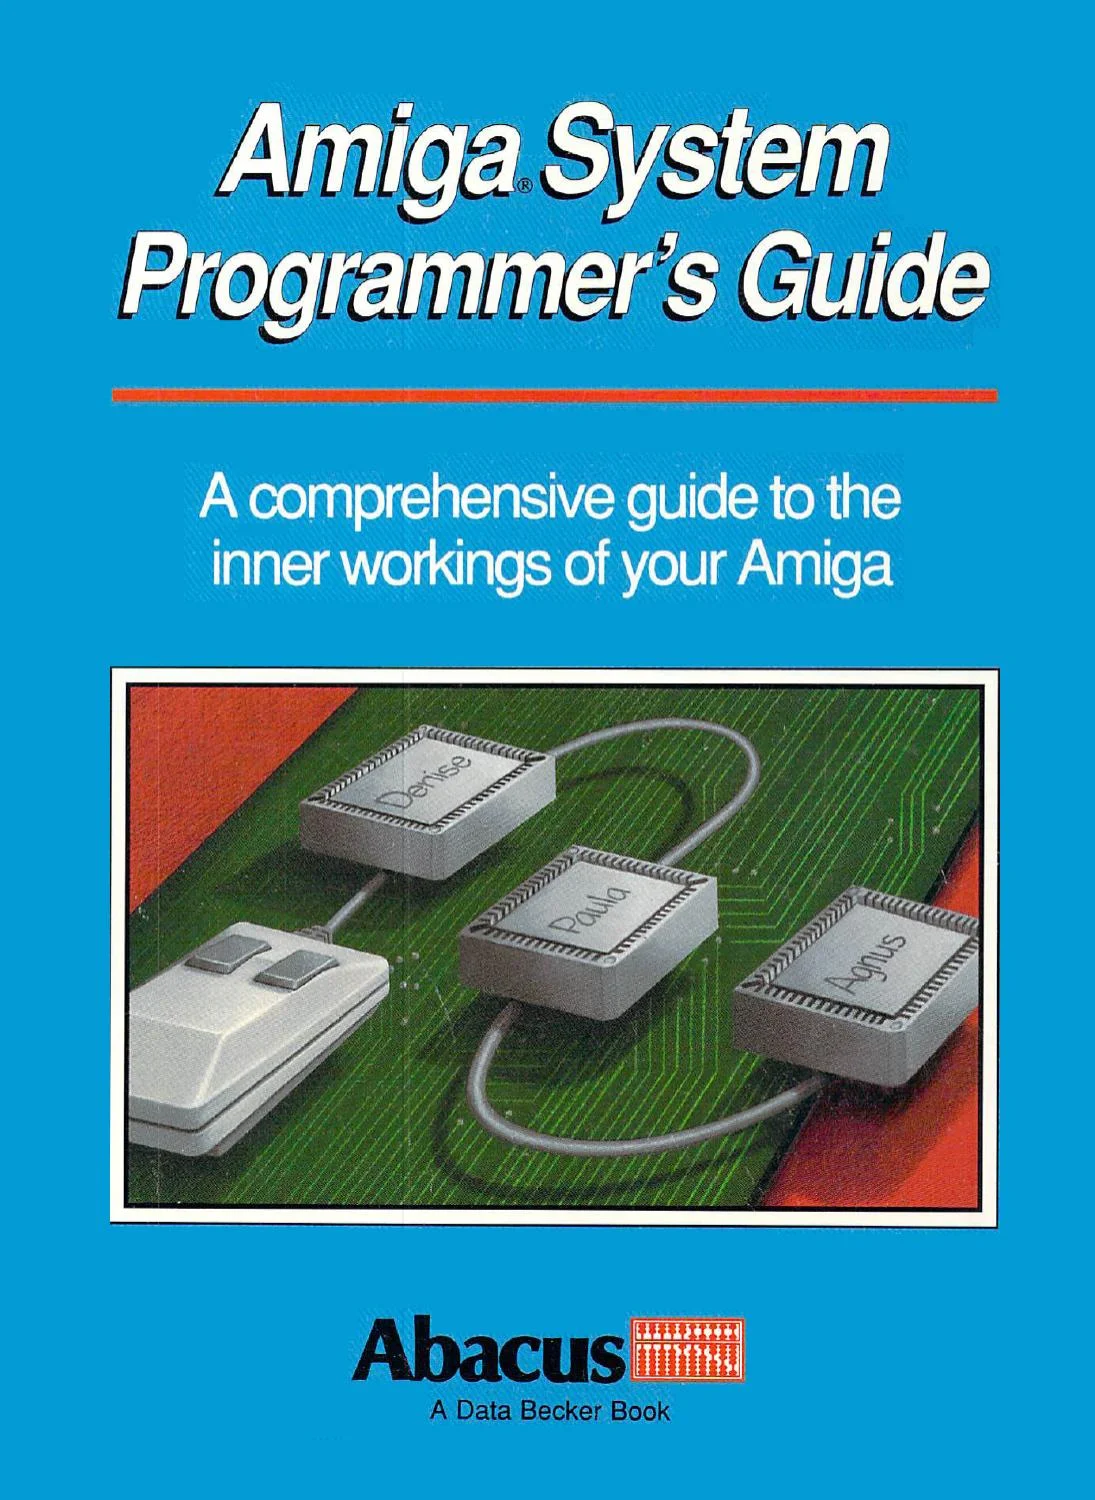 Amiga Systems Programmer